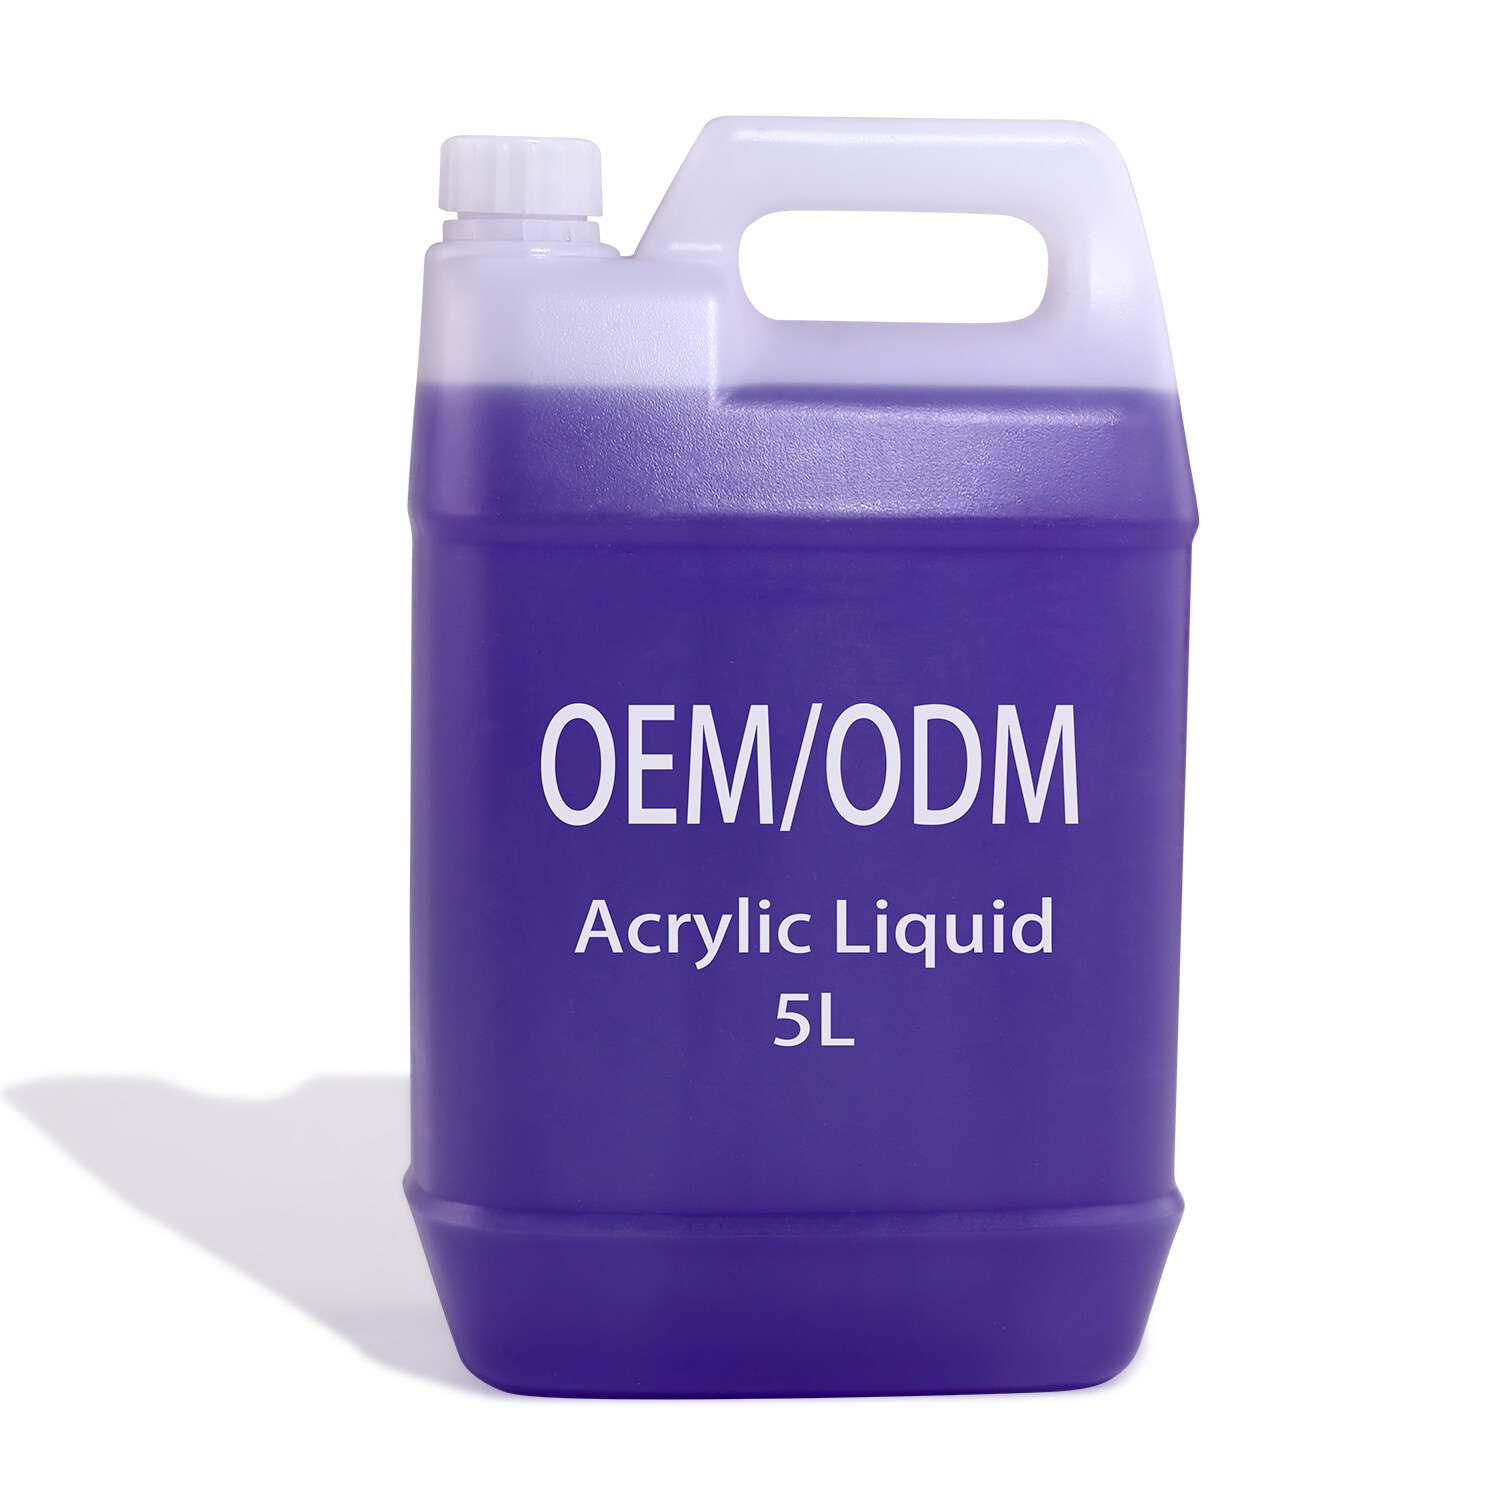 Monômero líquido acrílico OEM, monômero líquido acrílico ODM, monômero de líquido acrílico personalizado, líquido de monômero acrílico perfumado, pó acrílico e líquido de monômero